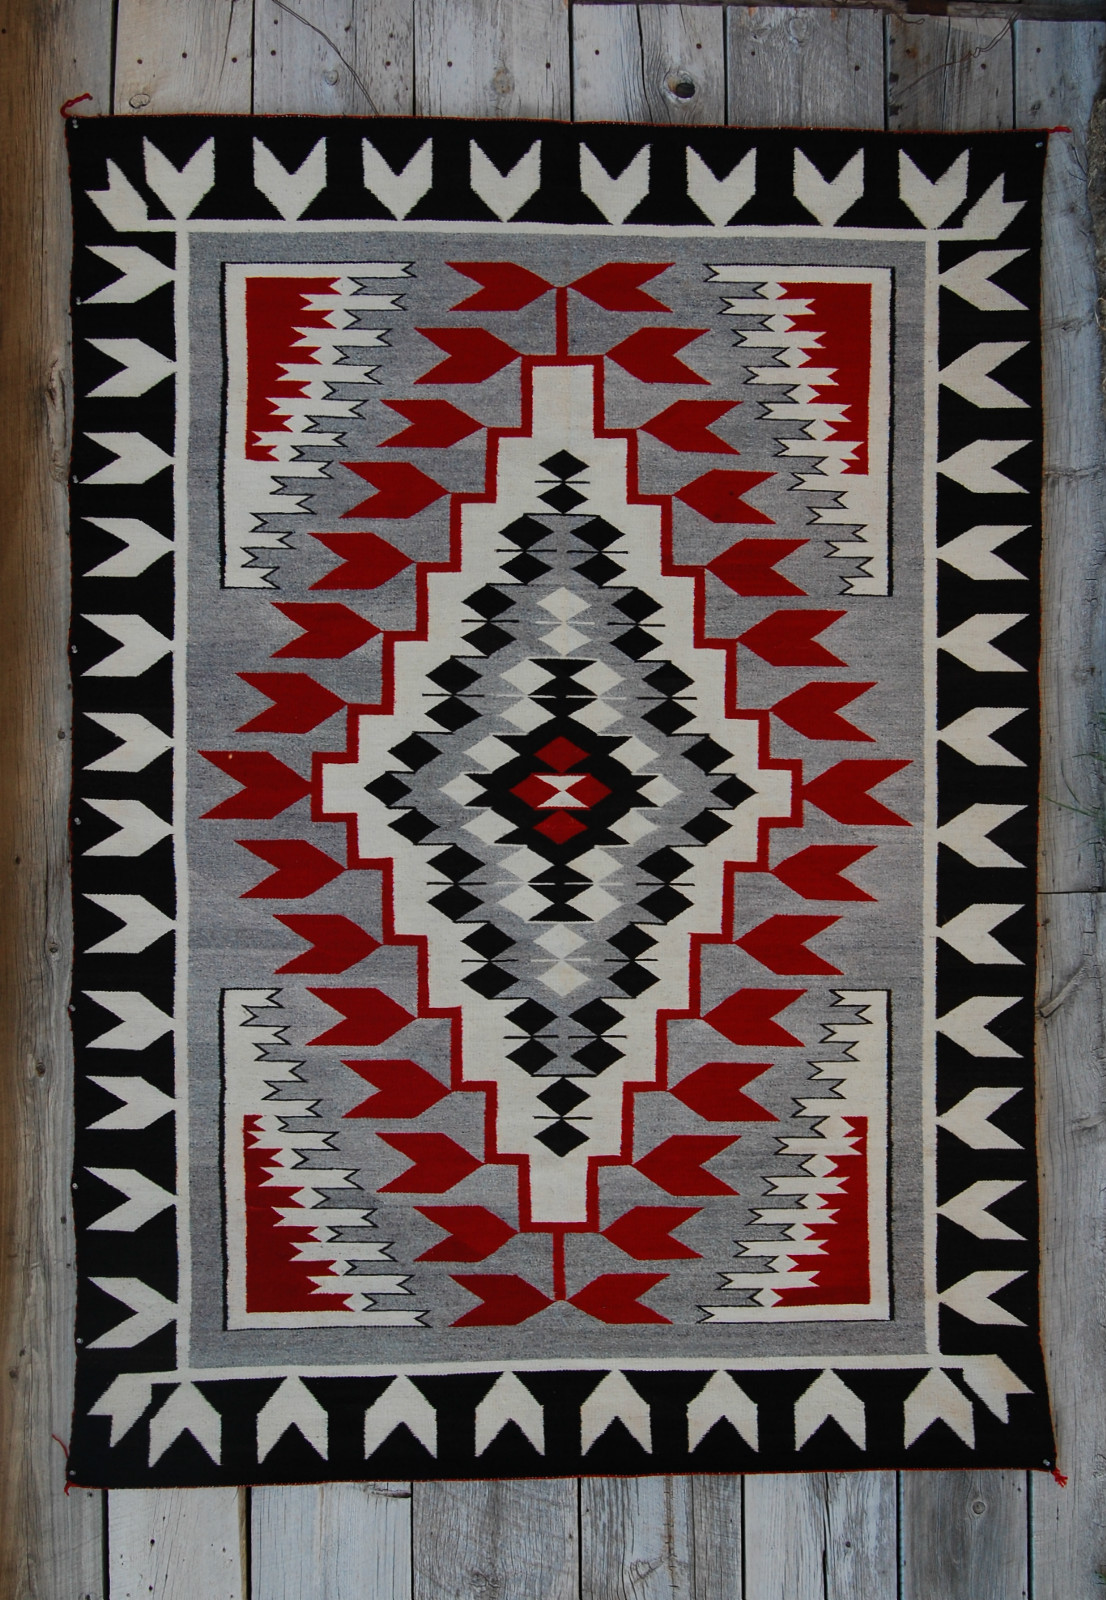 Copy Of Native American Blankets Melani Ryan Lessons Tes Teach,1970s Fashion Designers